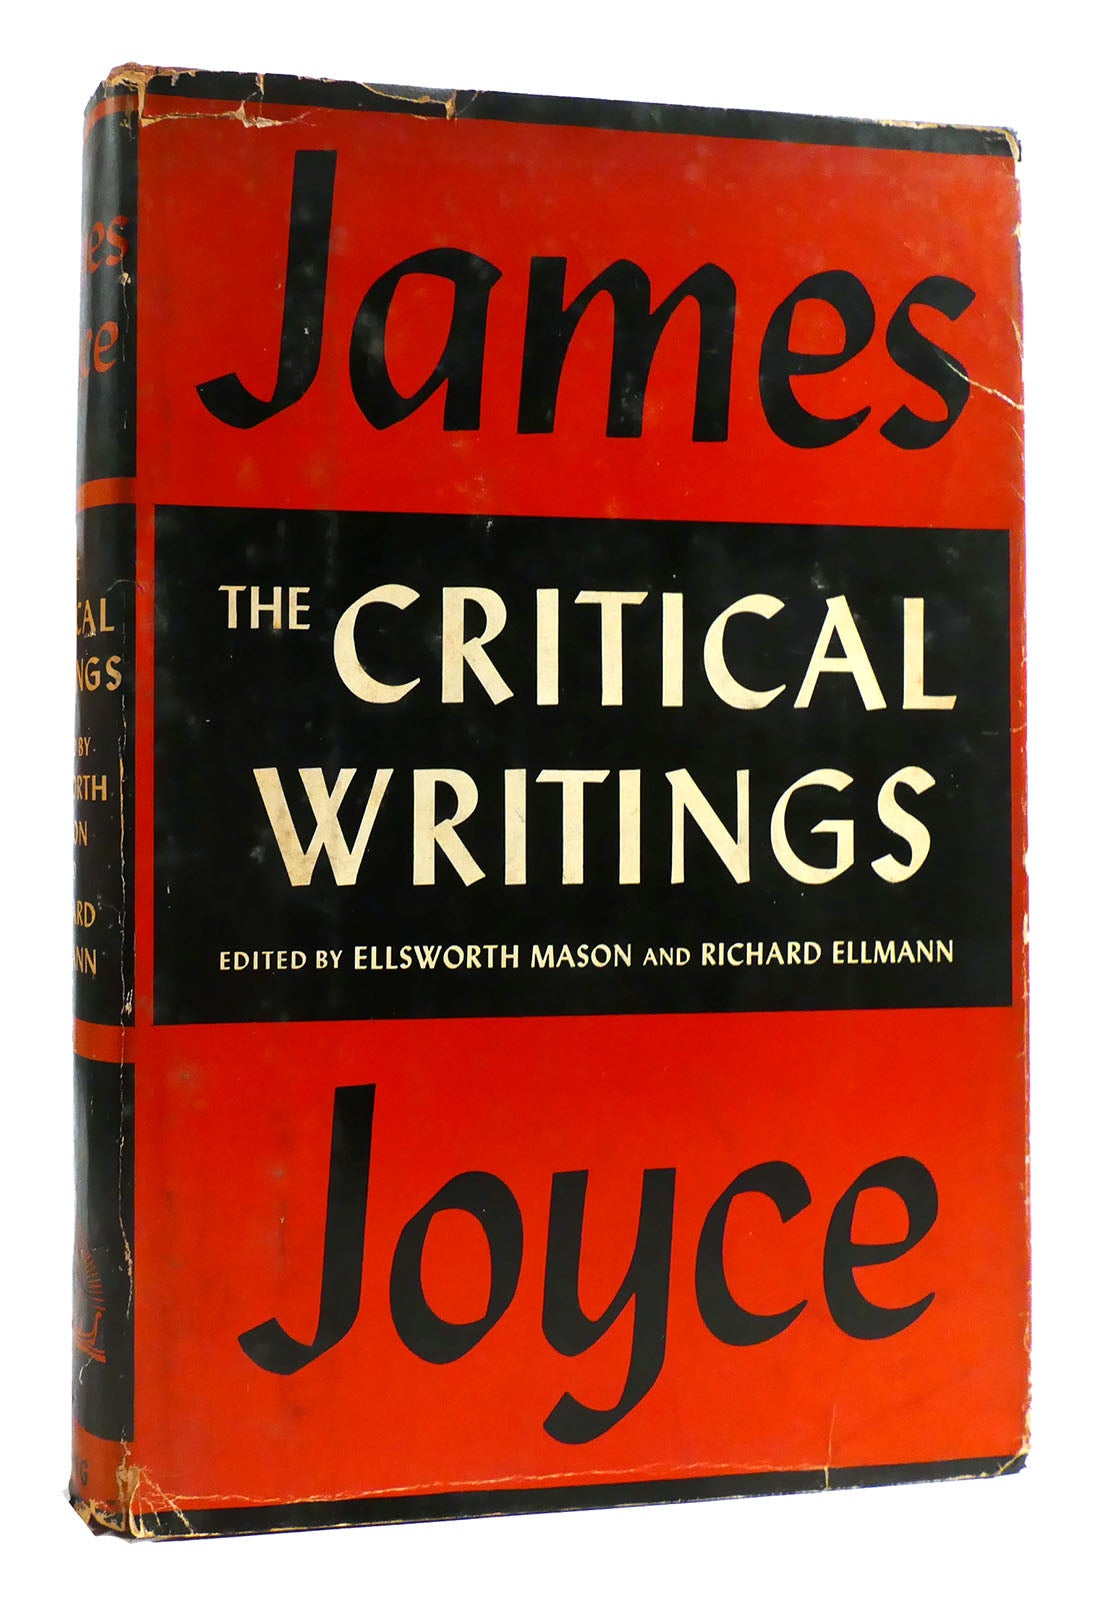 THE CRITICAL WRITINGS OF JAMES JOYCE | Ellsworth Mason James Joyce ...